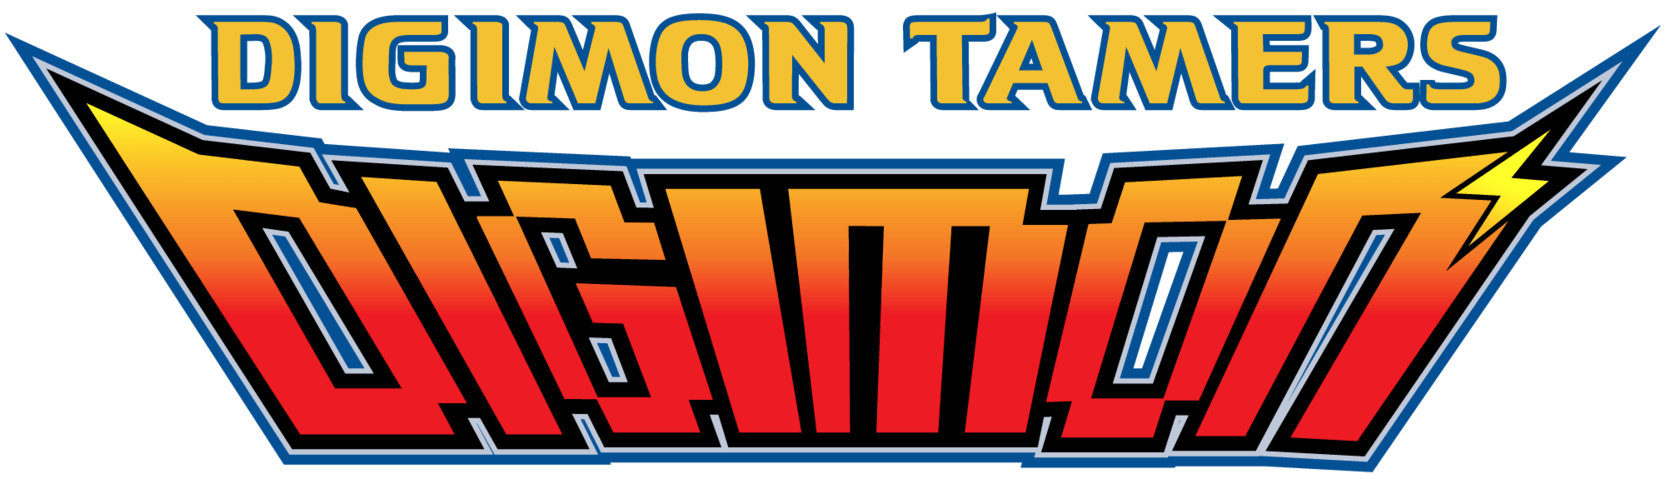 Digimon Logo - Digimon Tamers Logo Vector v2 by 3Prsta on DeviantArt